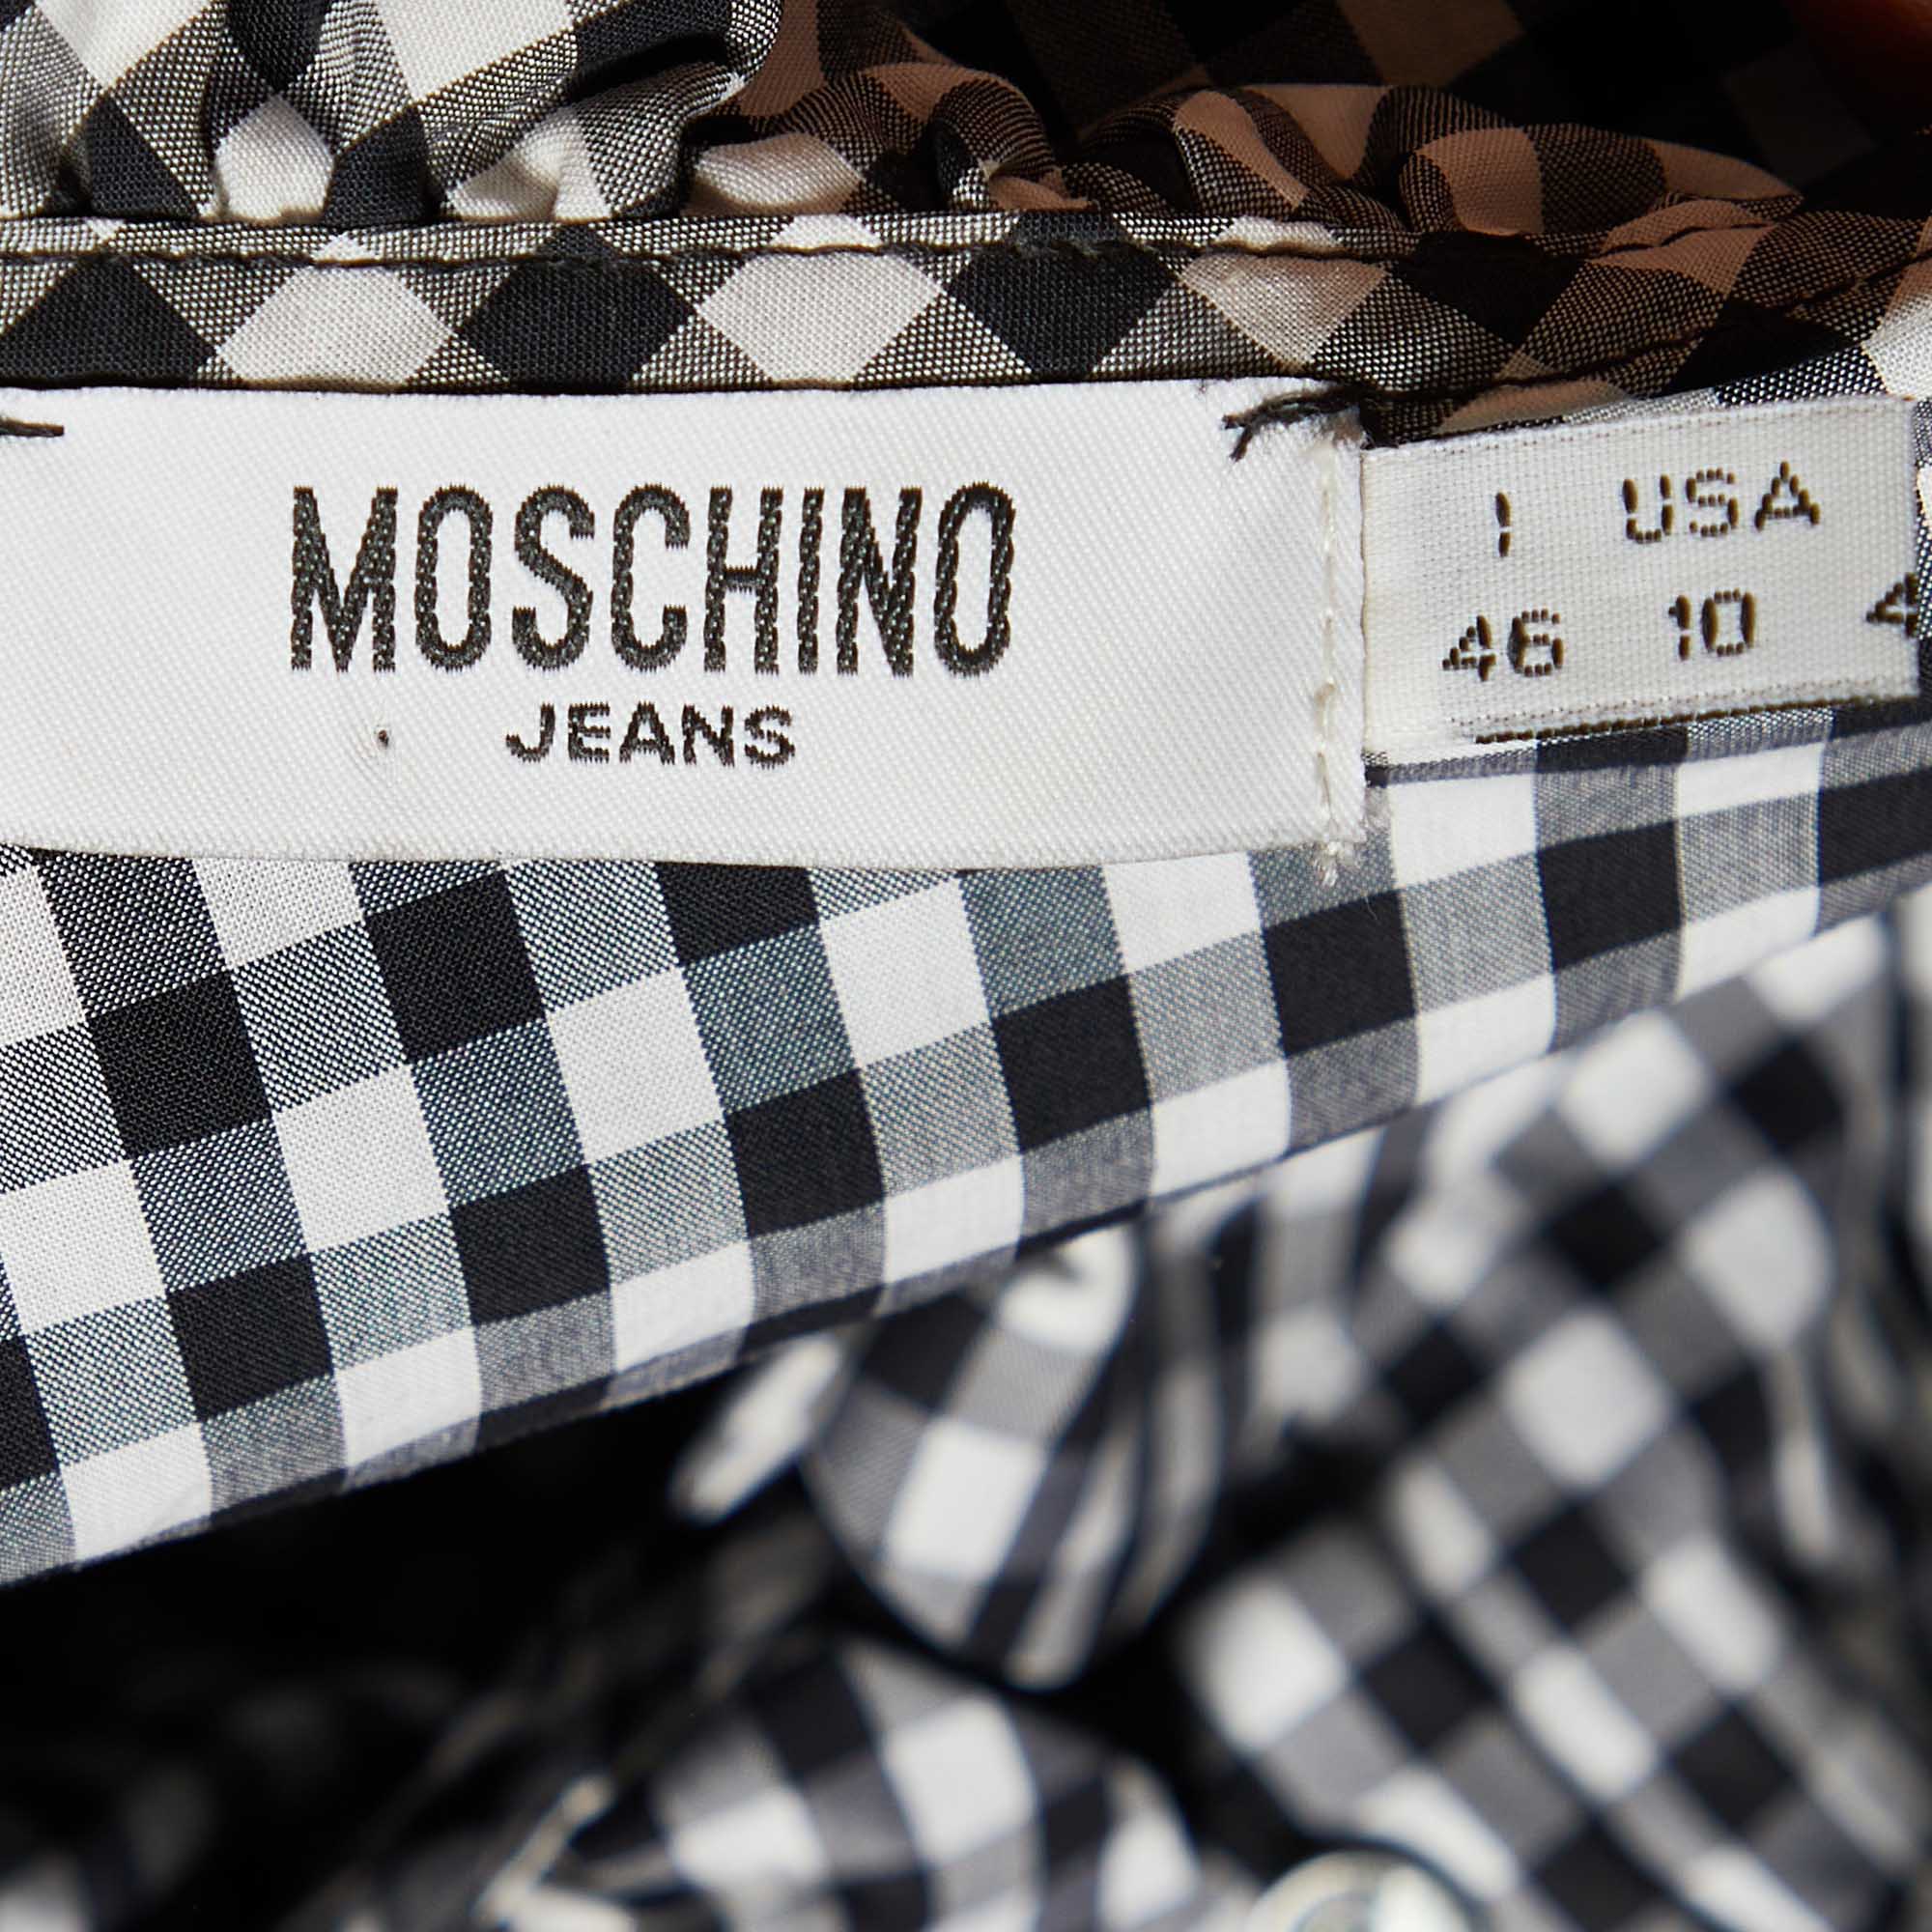 Moschino Jeans Monochrome Gingham Check Cotton Dress L